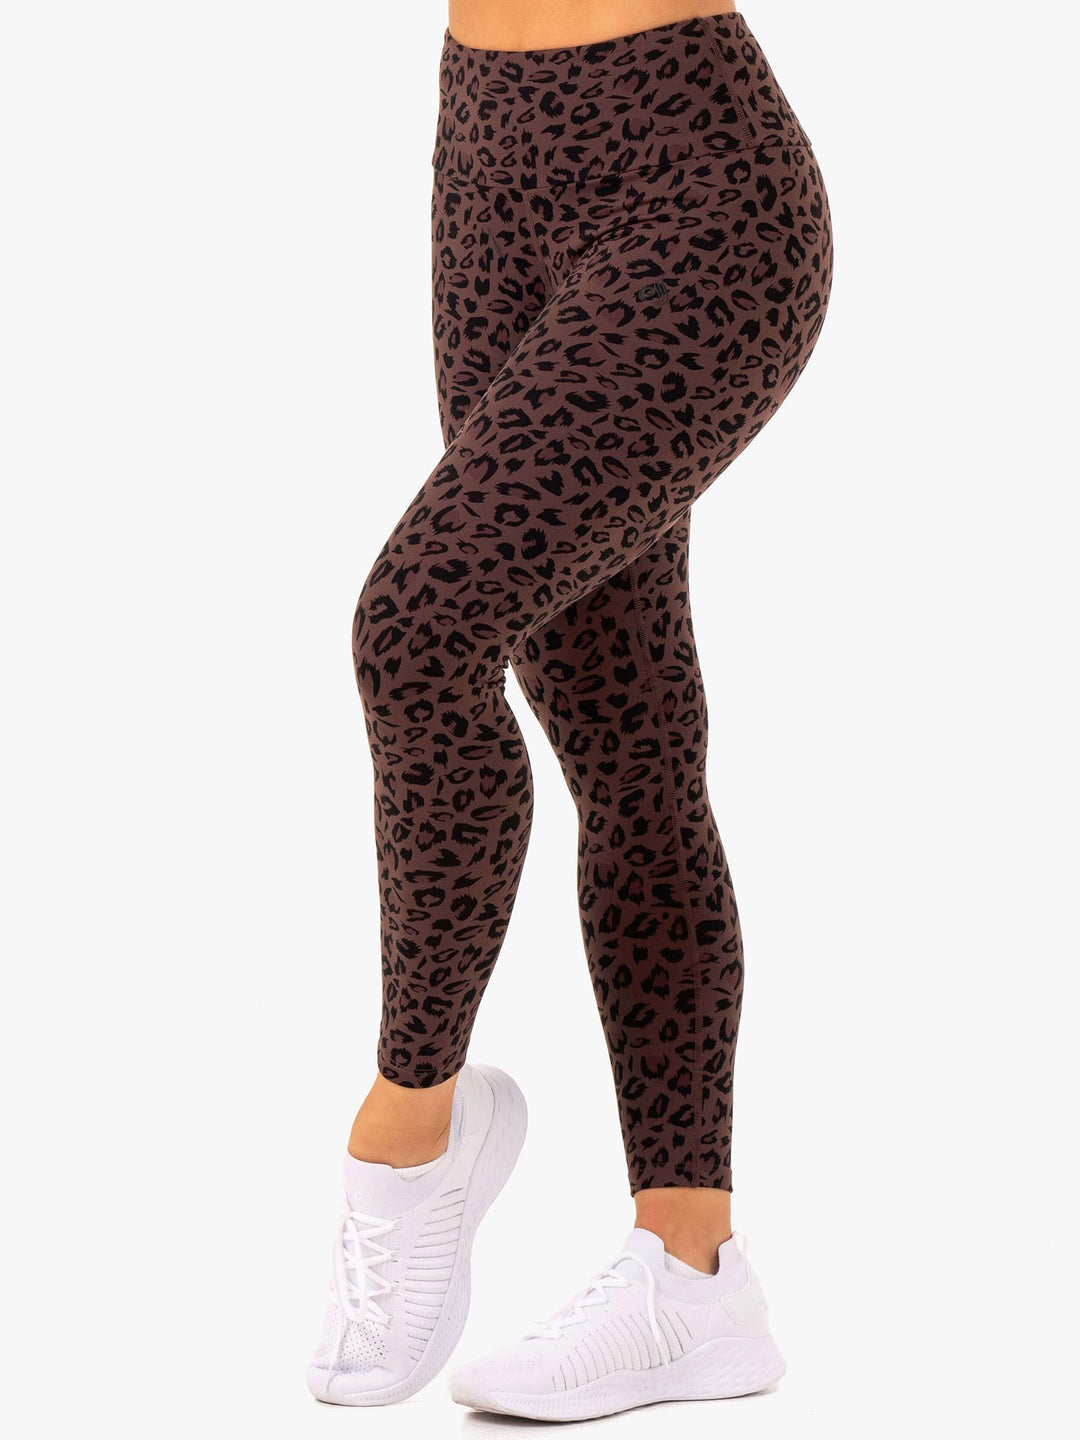 Adapt High Waisted Scrunch Leggings - Chocolate Leopard - Ryderwear